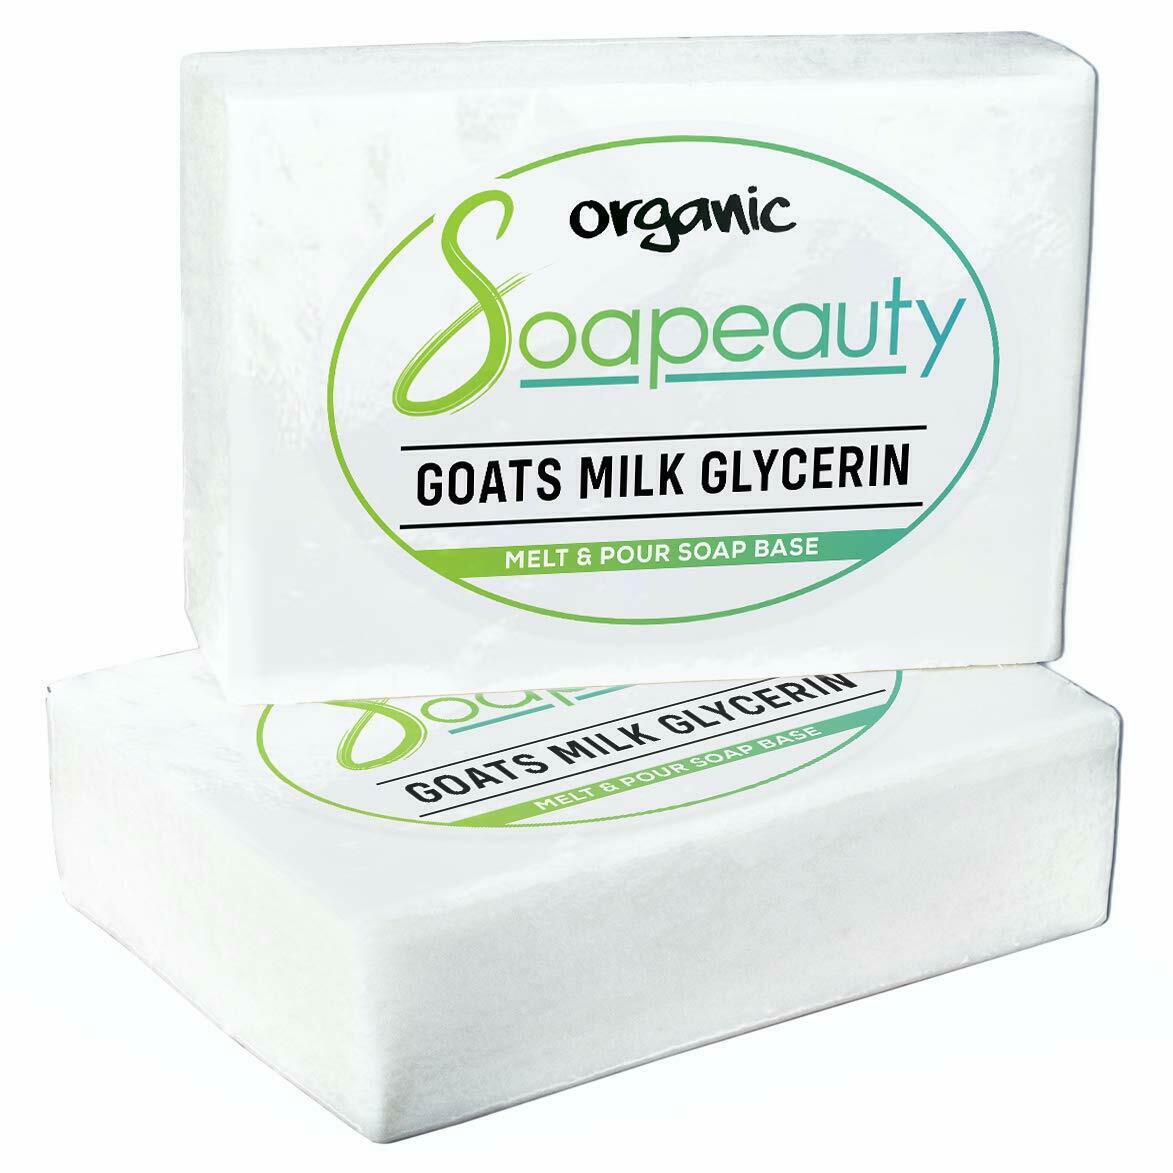 Goats Milk Glycerin Melt & Pour Soap Base Organic Natural